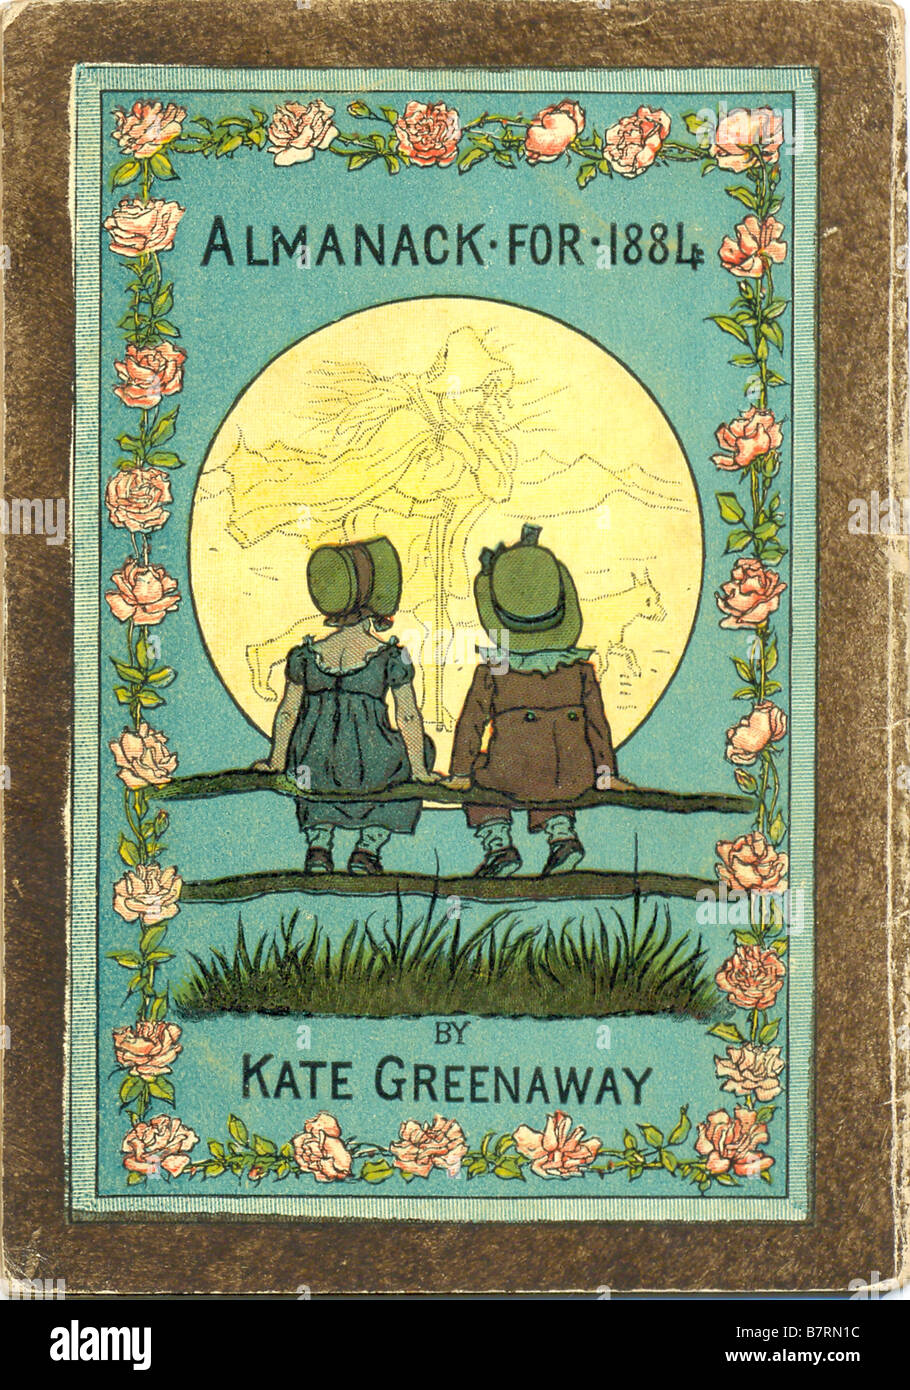 Almanac for 1884 by Kate Greenaway Stock Photo